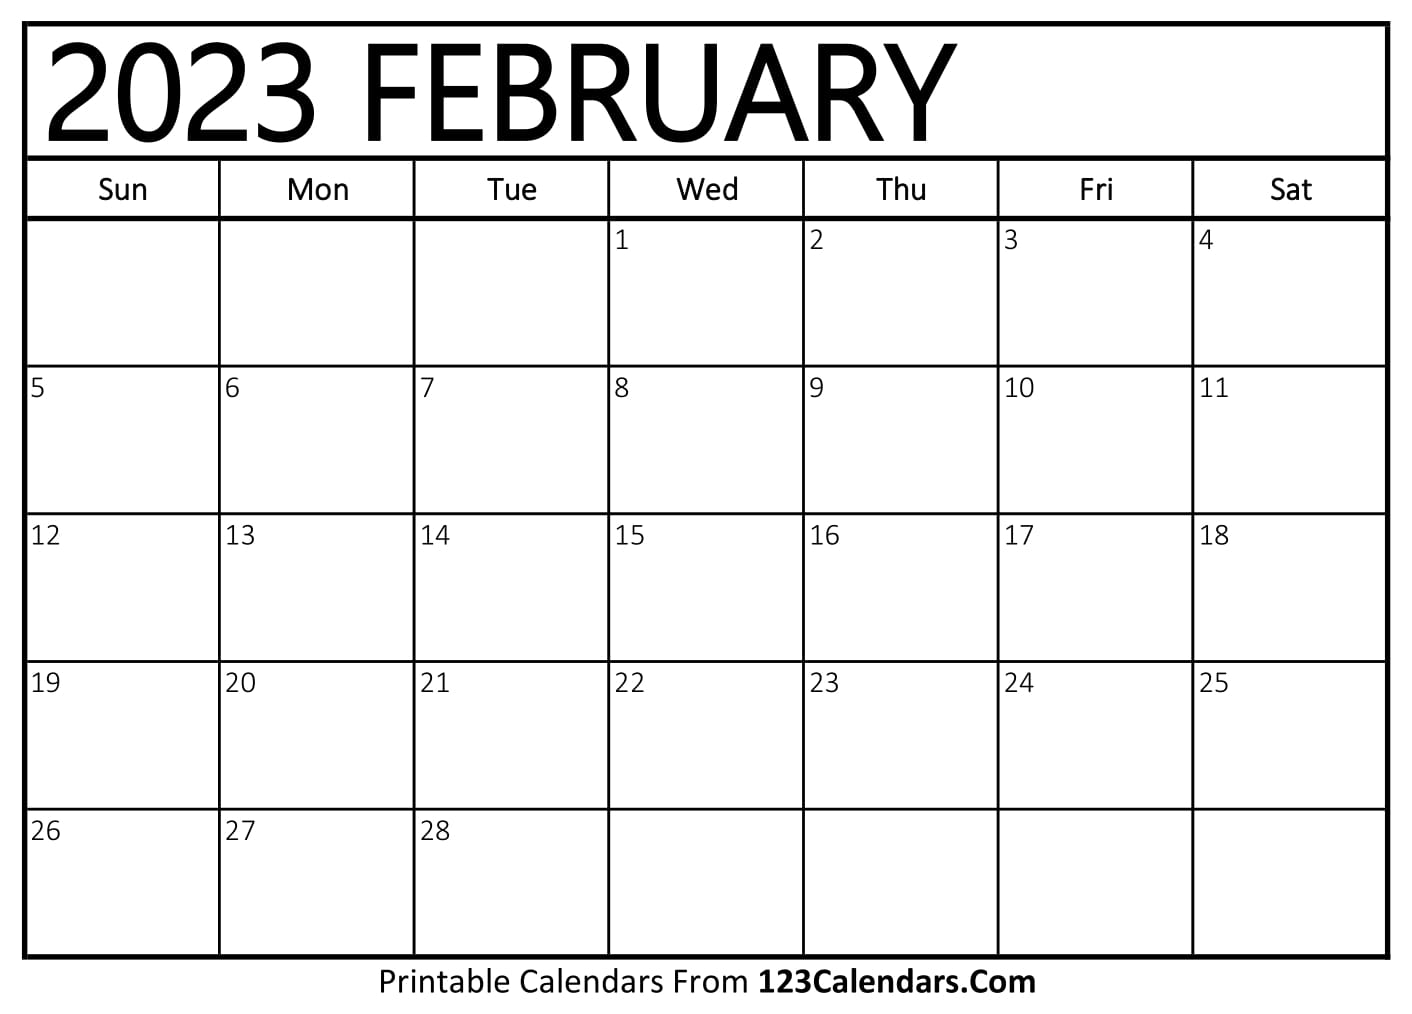 https://www.123calendars.com/images/February/2023/Printable-February-2023-Calendar.jpg